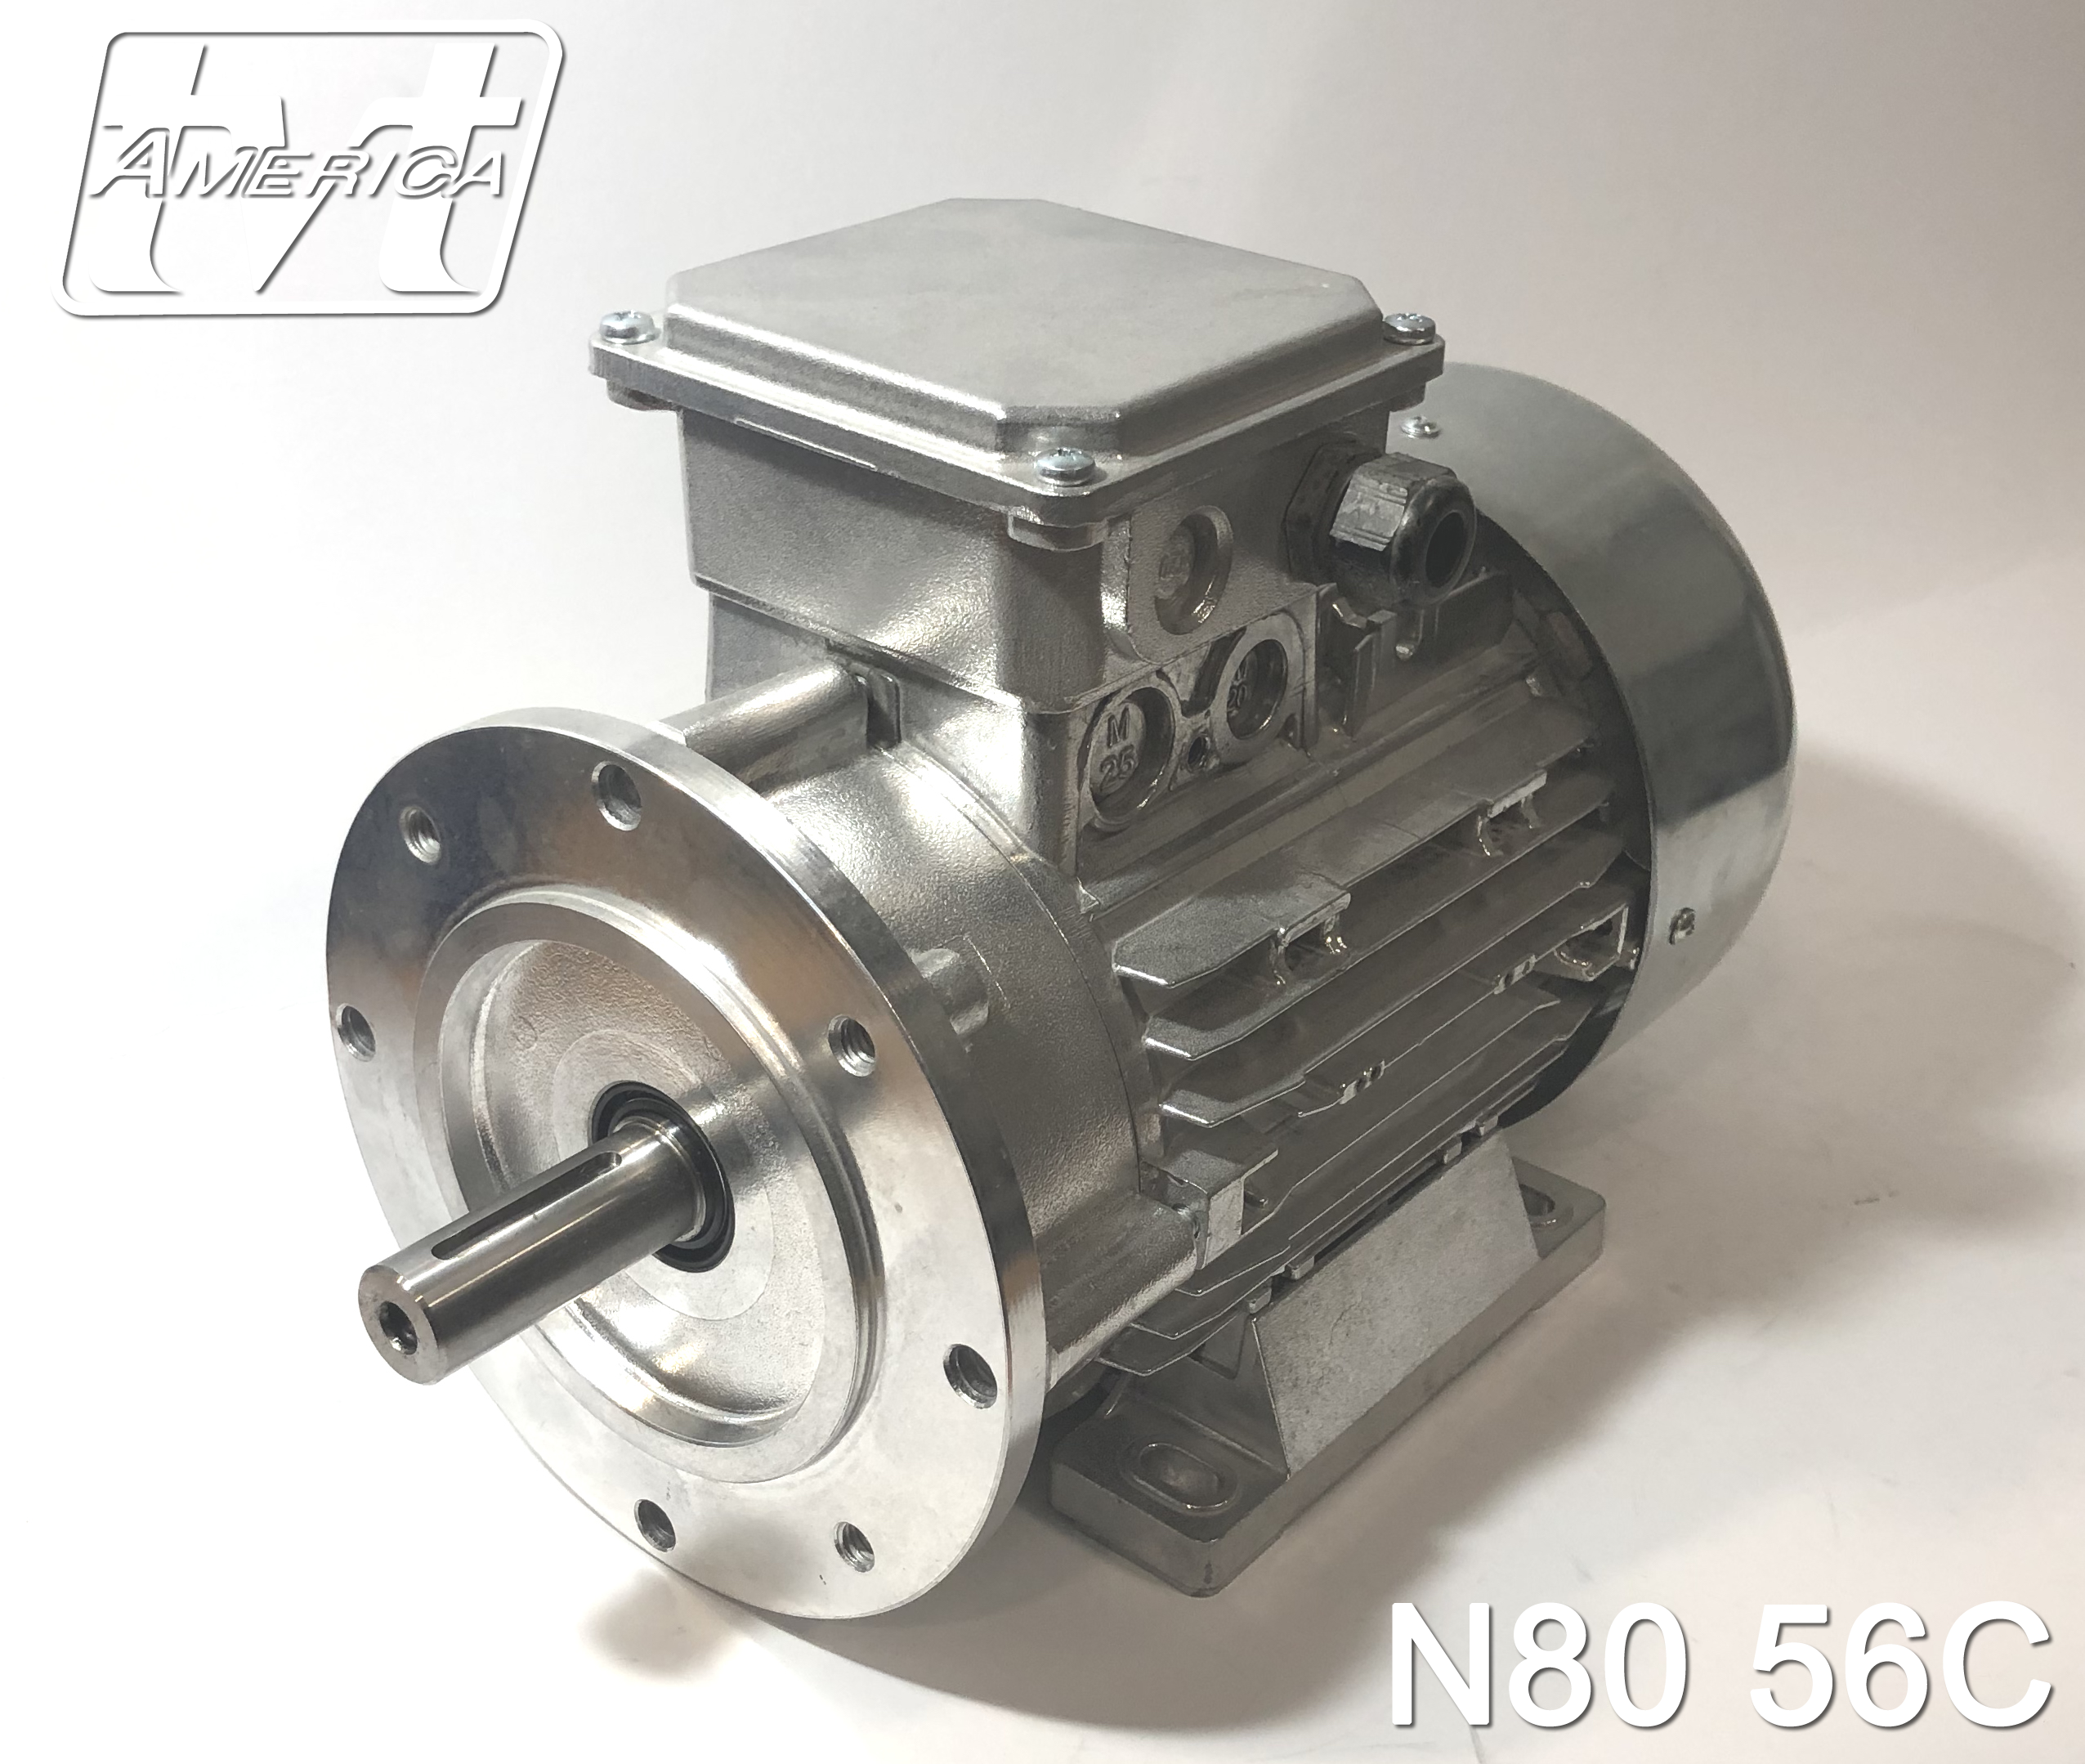 1.5hp 2pole 208-230/460V/60Hz 3ph NEMA 56C AC Motor – TVT America